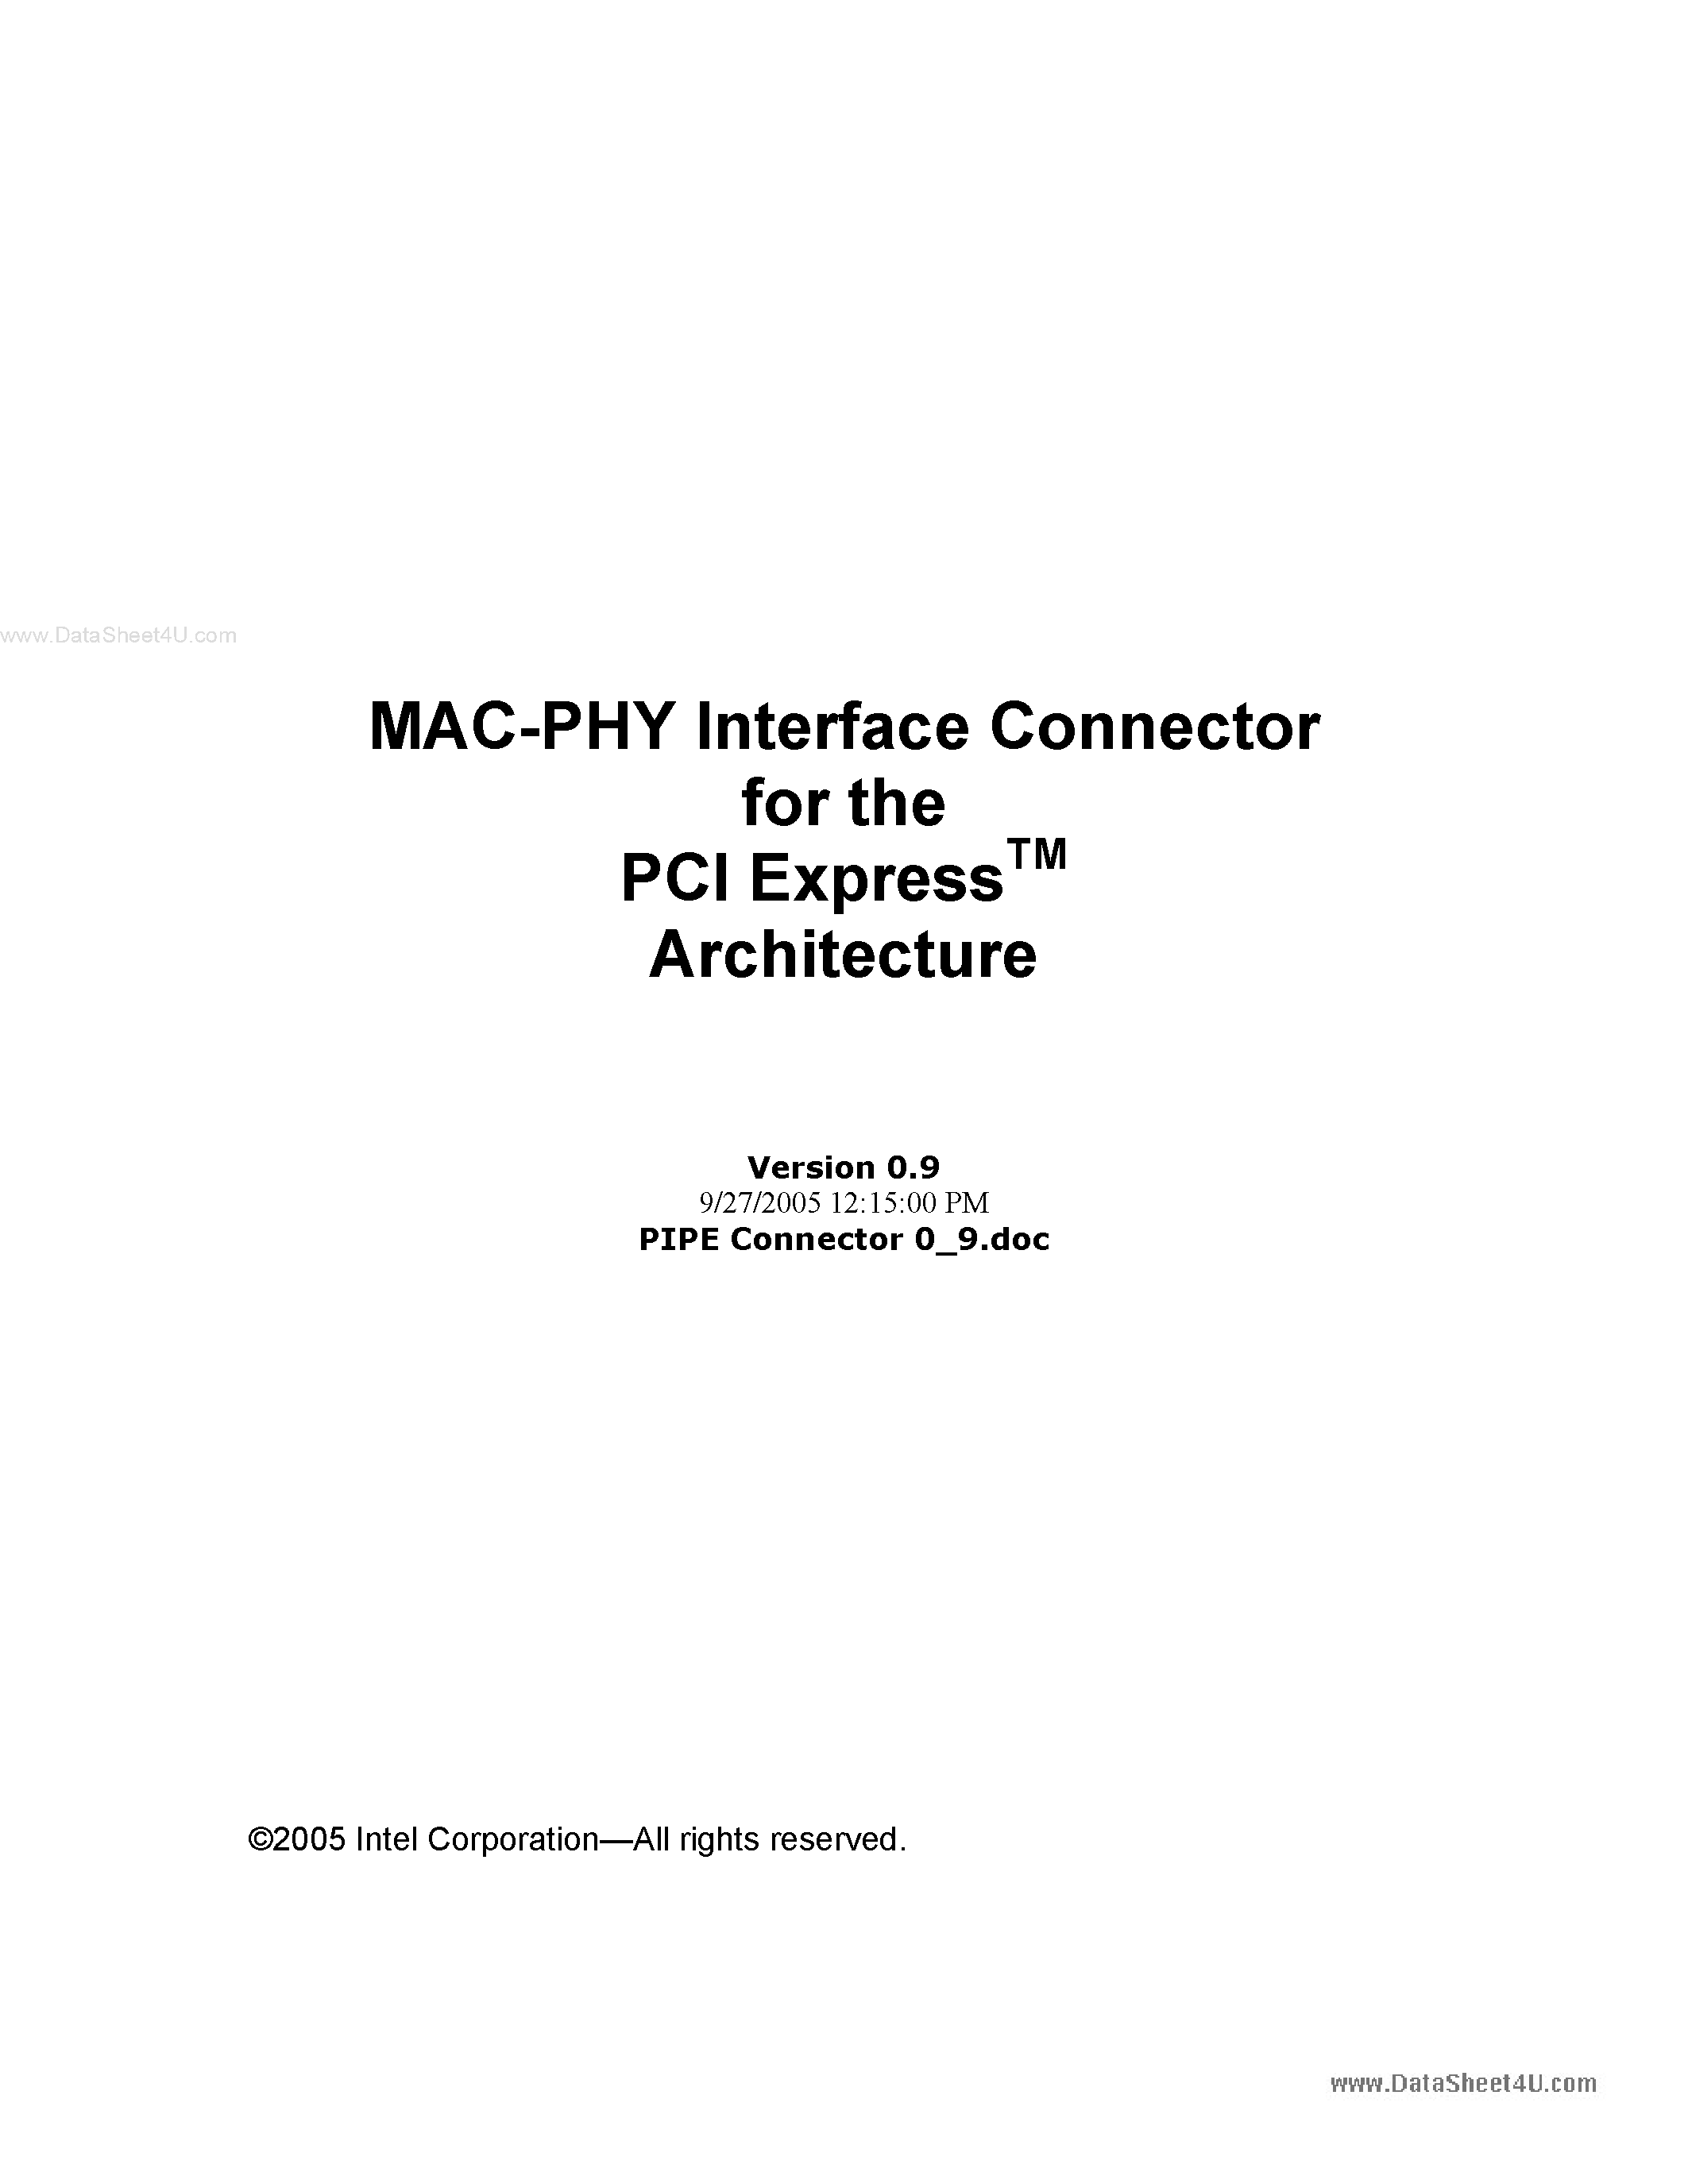 Даташит QSE-060-01-F-D-A - MAC-PHY Interface Connector страница 1